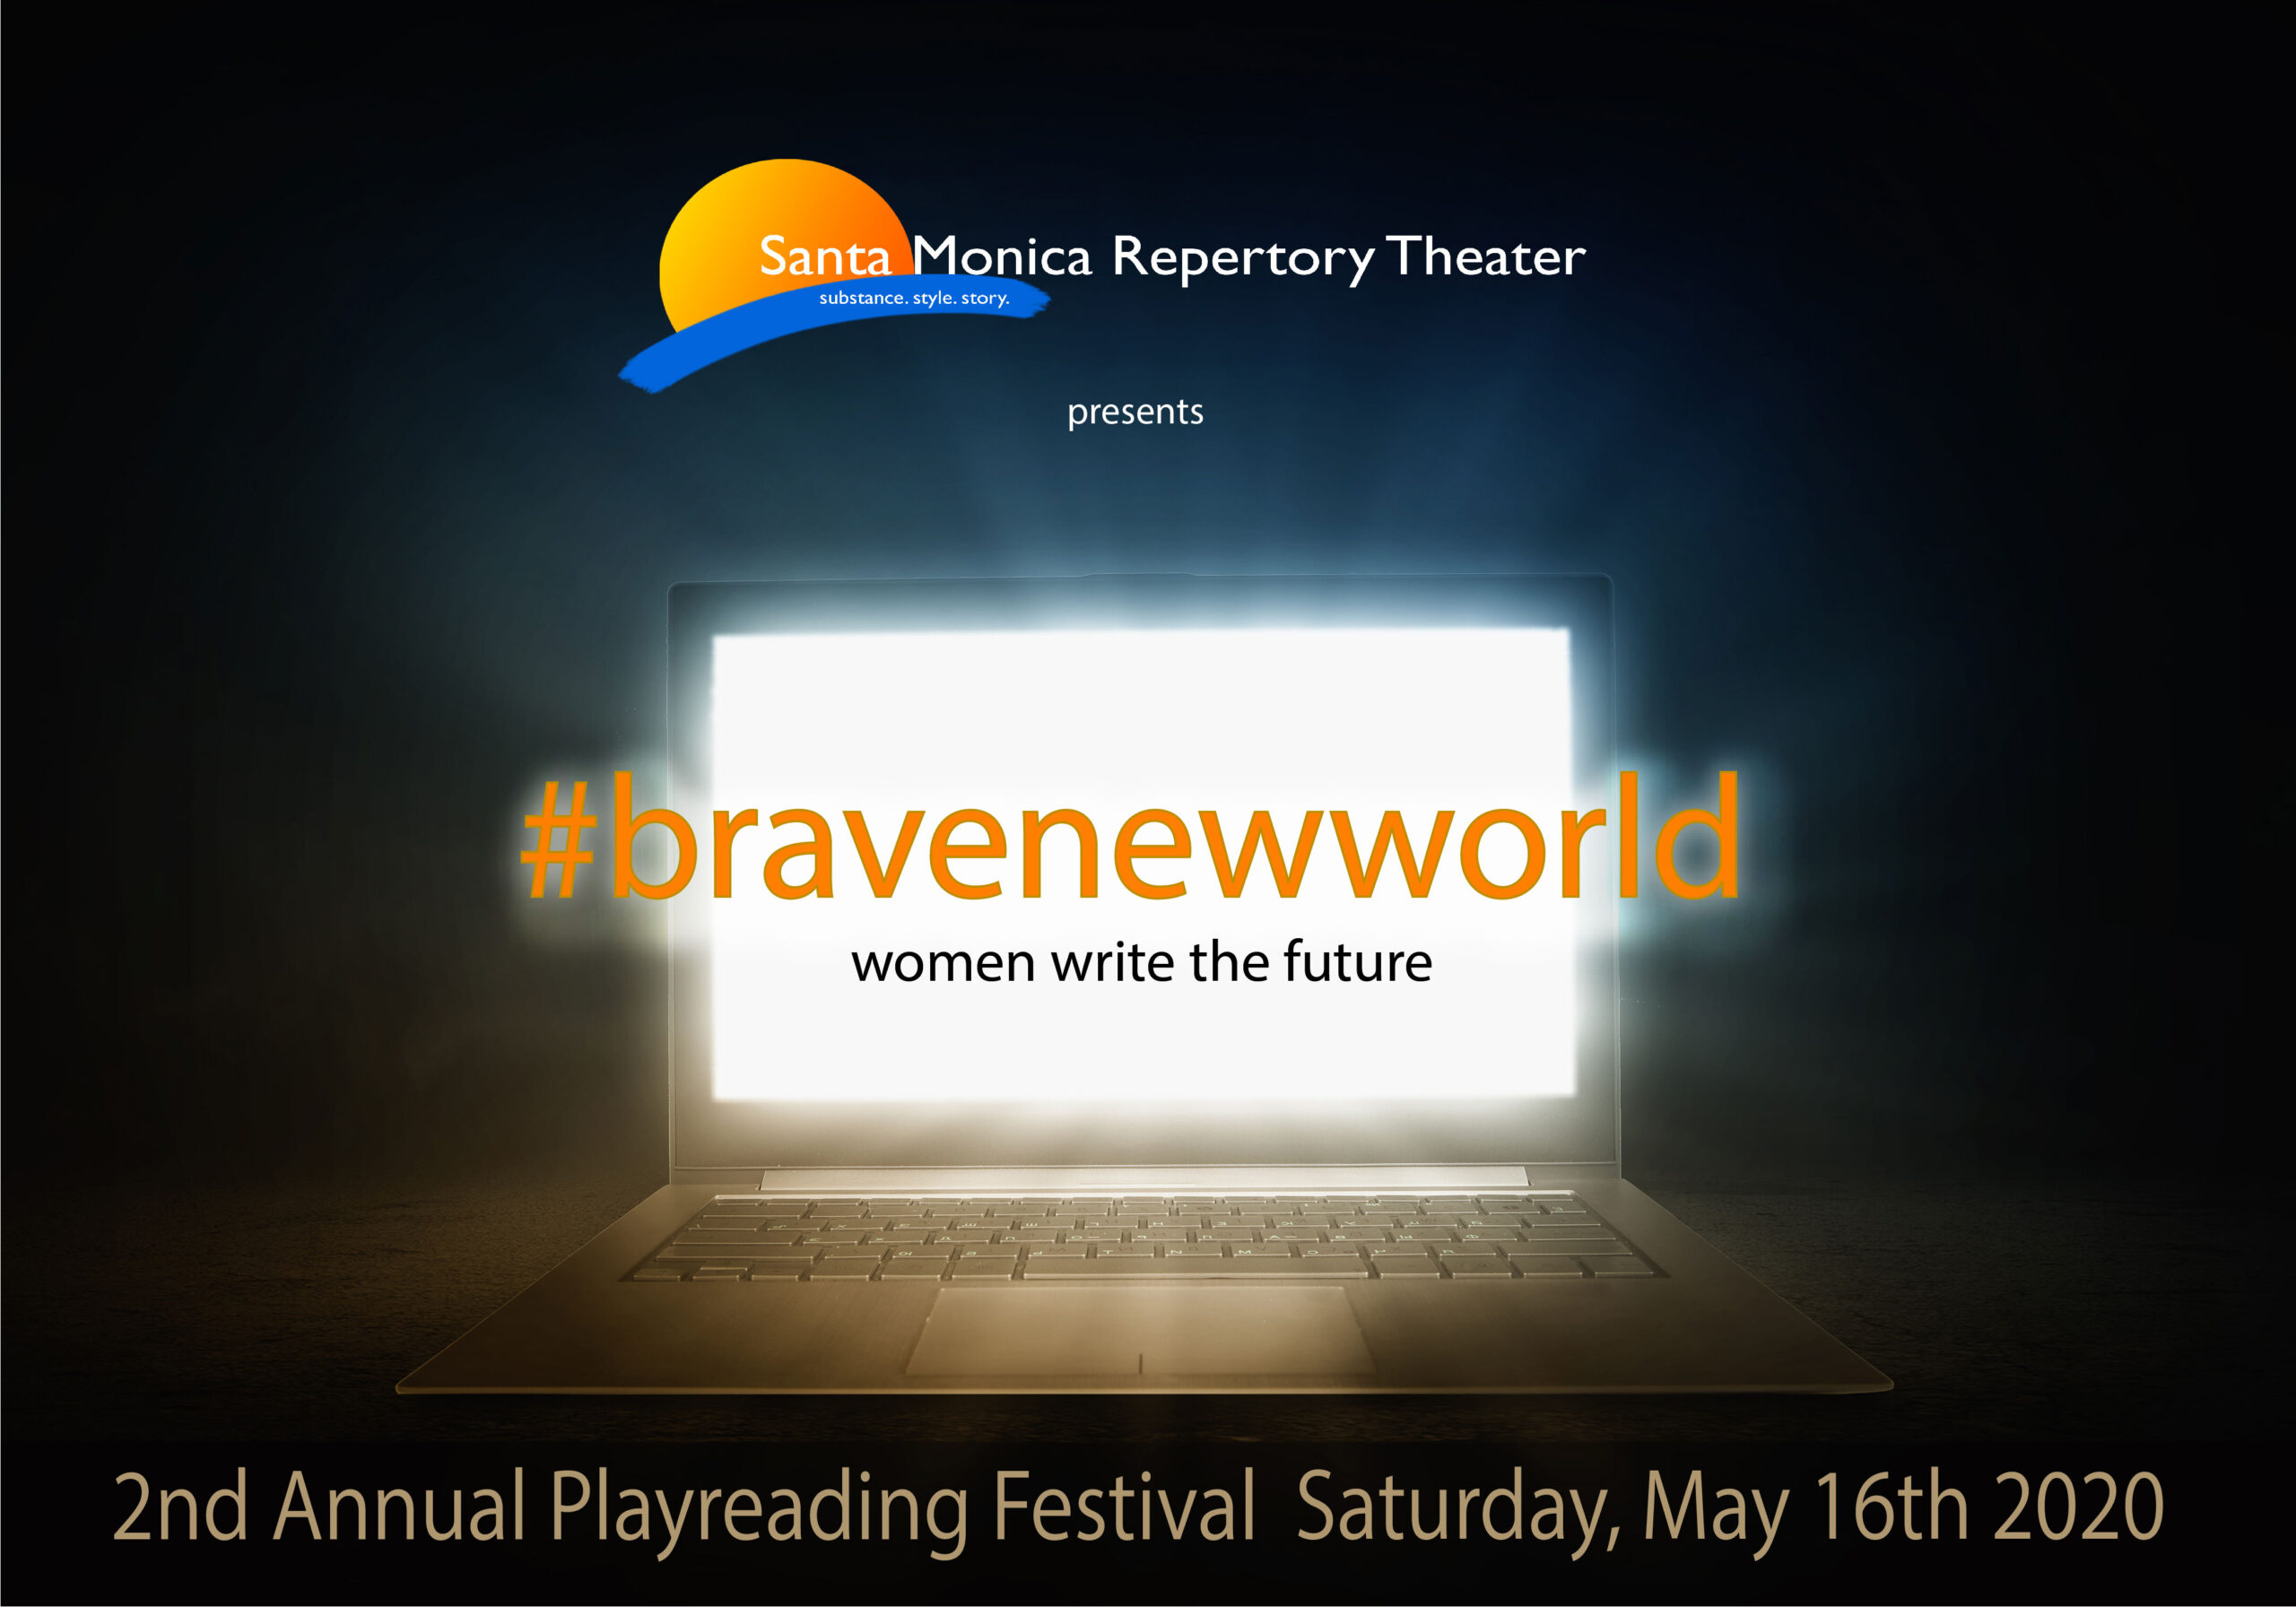 2nd Annual Playreading Festival #bravenewworld - women write the future